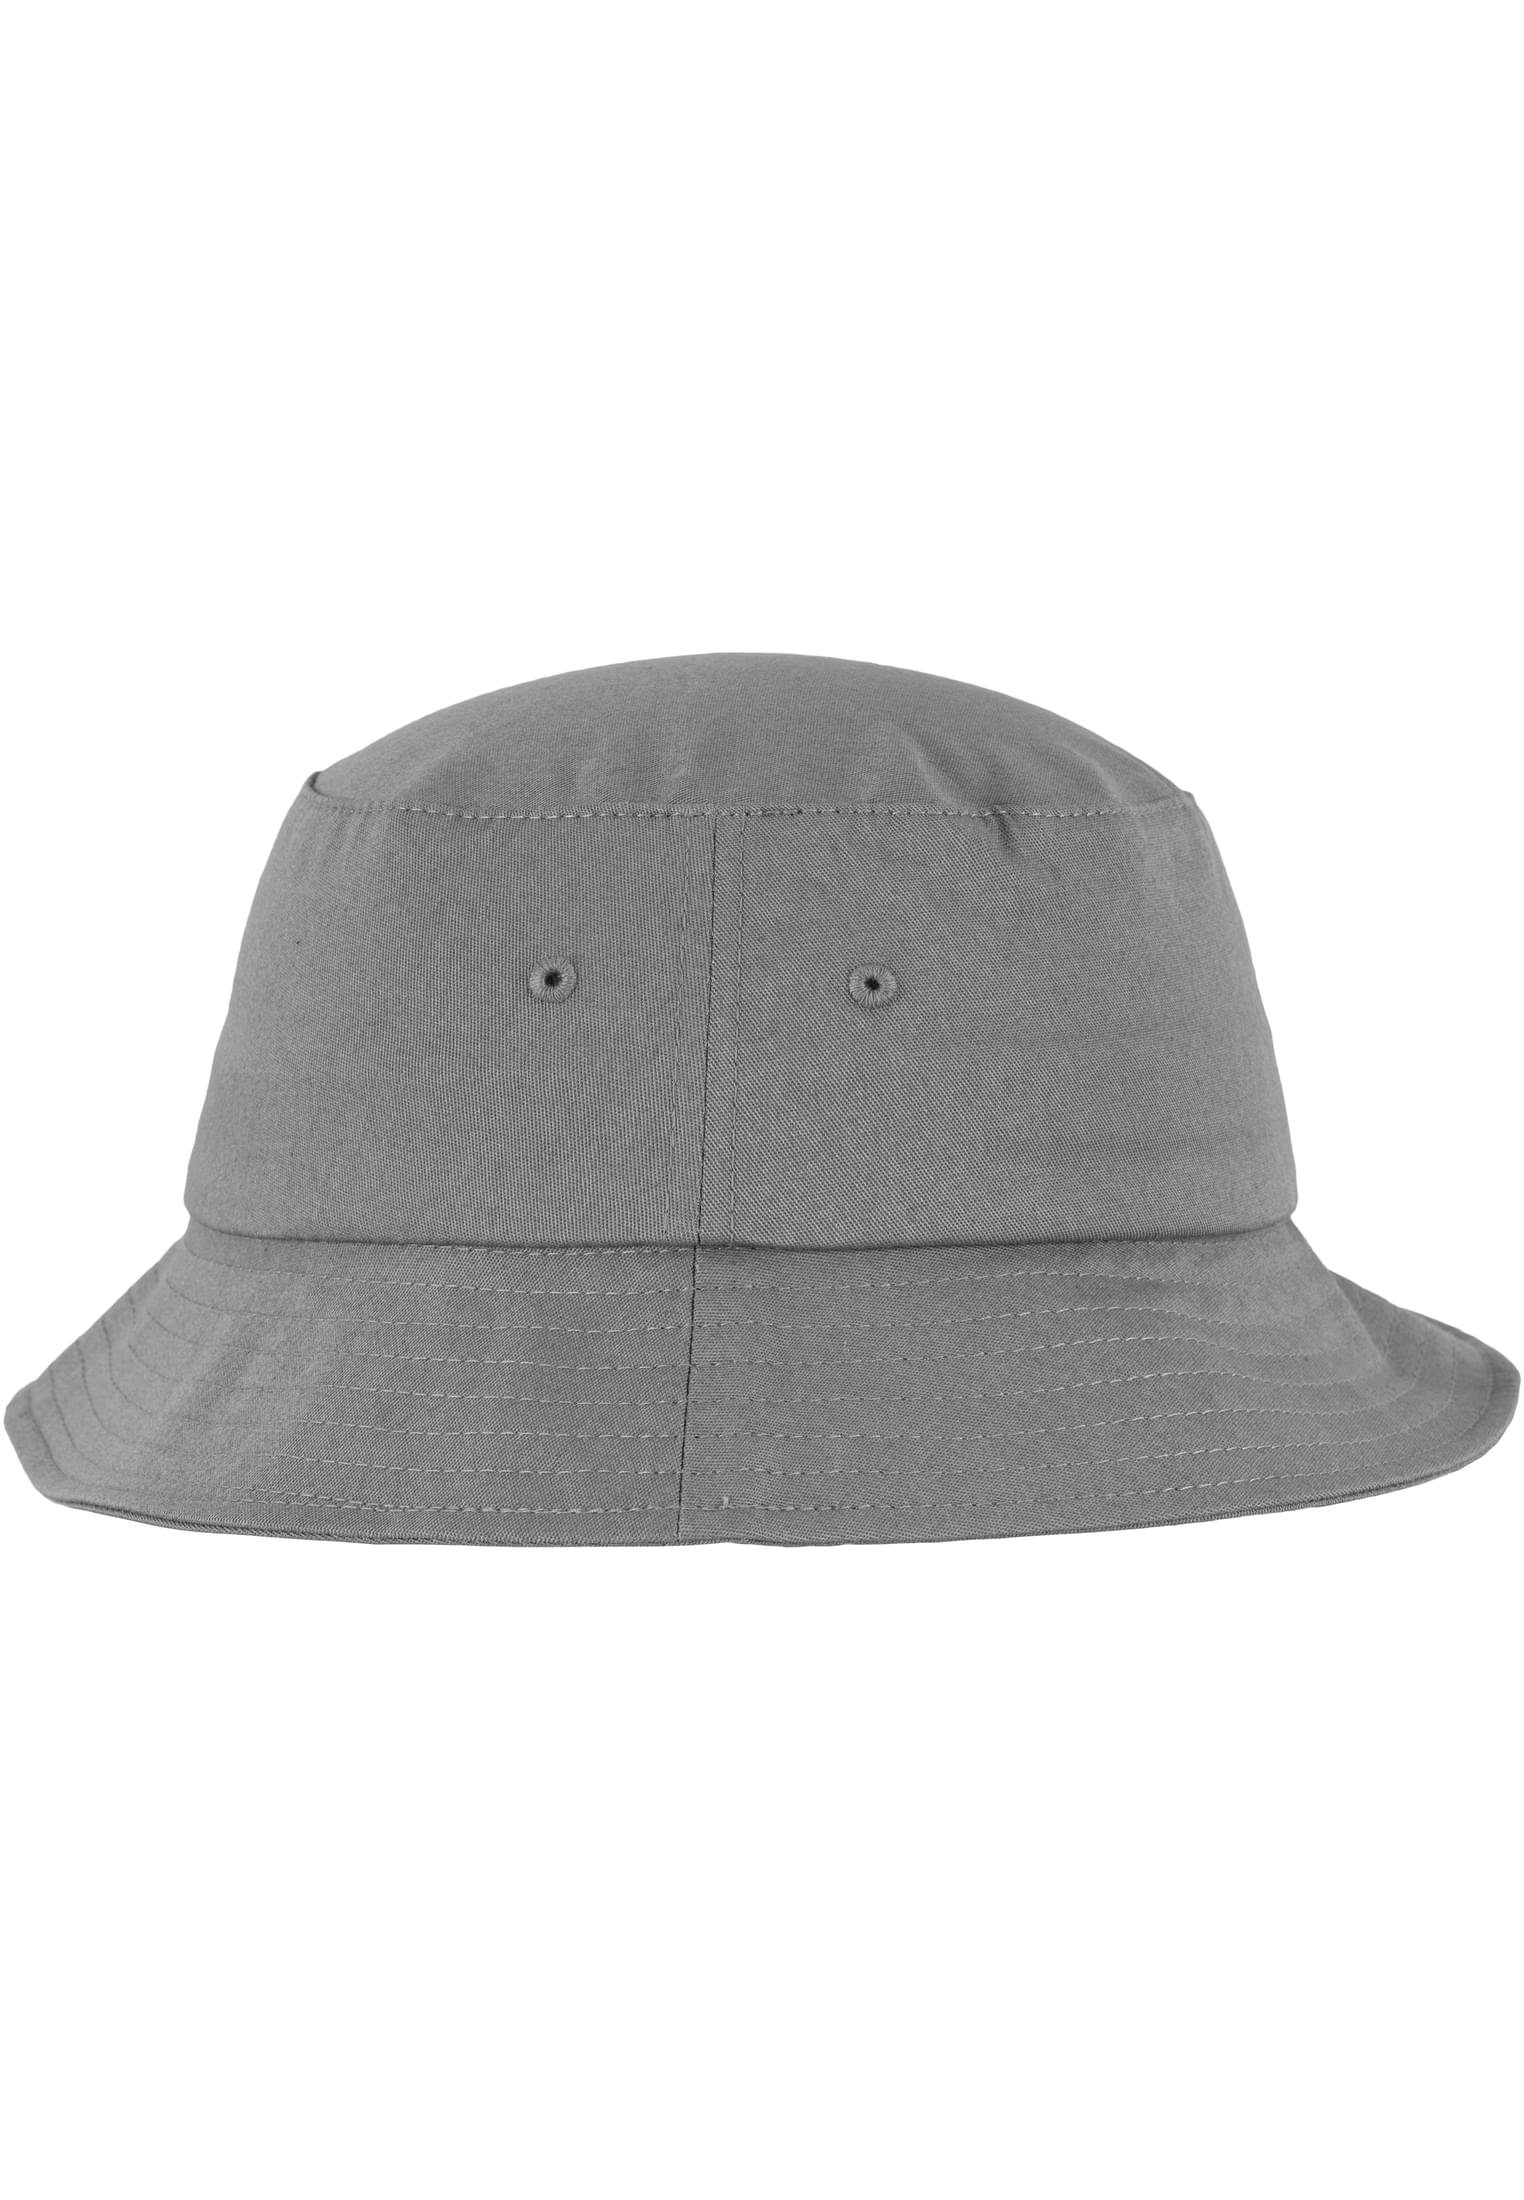 Flexfit Flex Cotton Twill Flexfit grey Bucket Hat Accessoires Cap